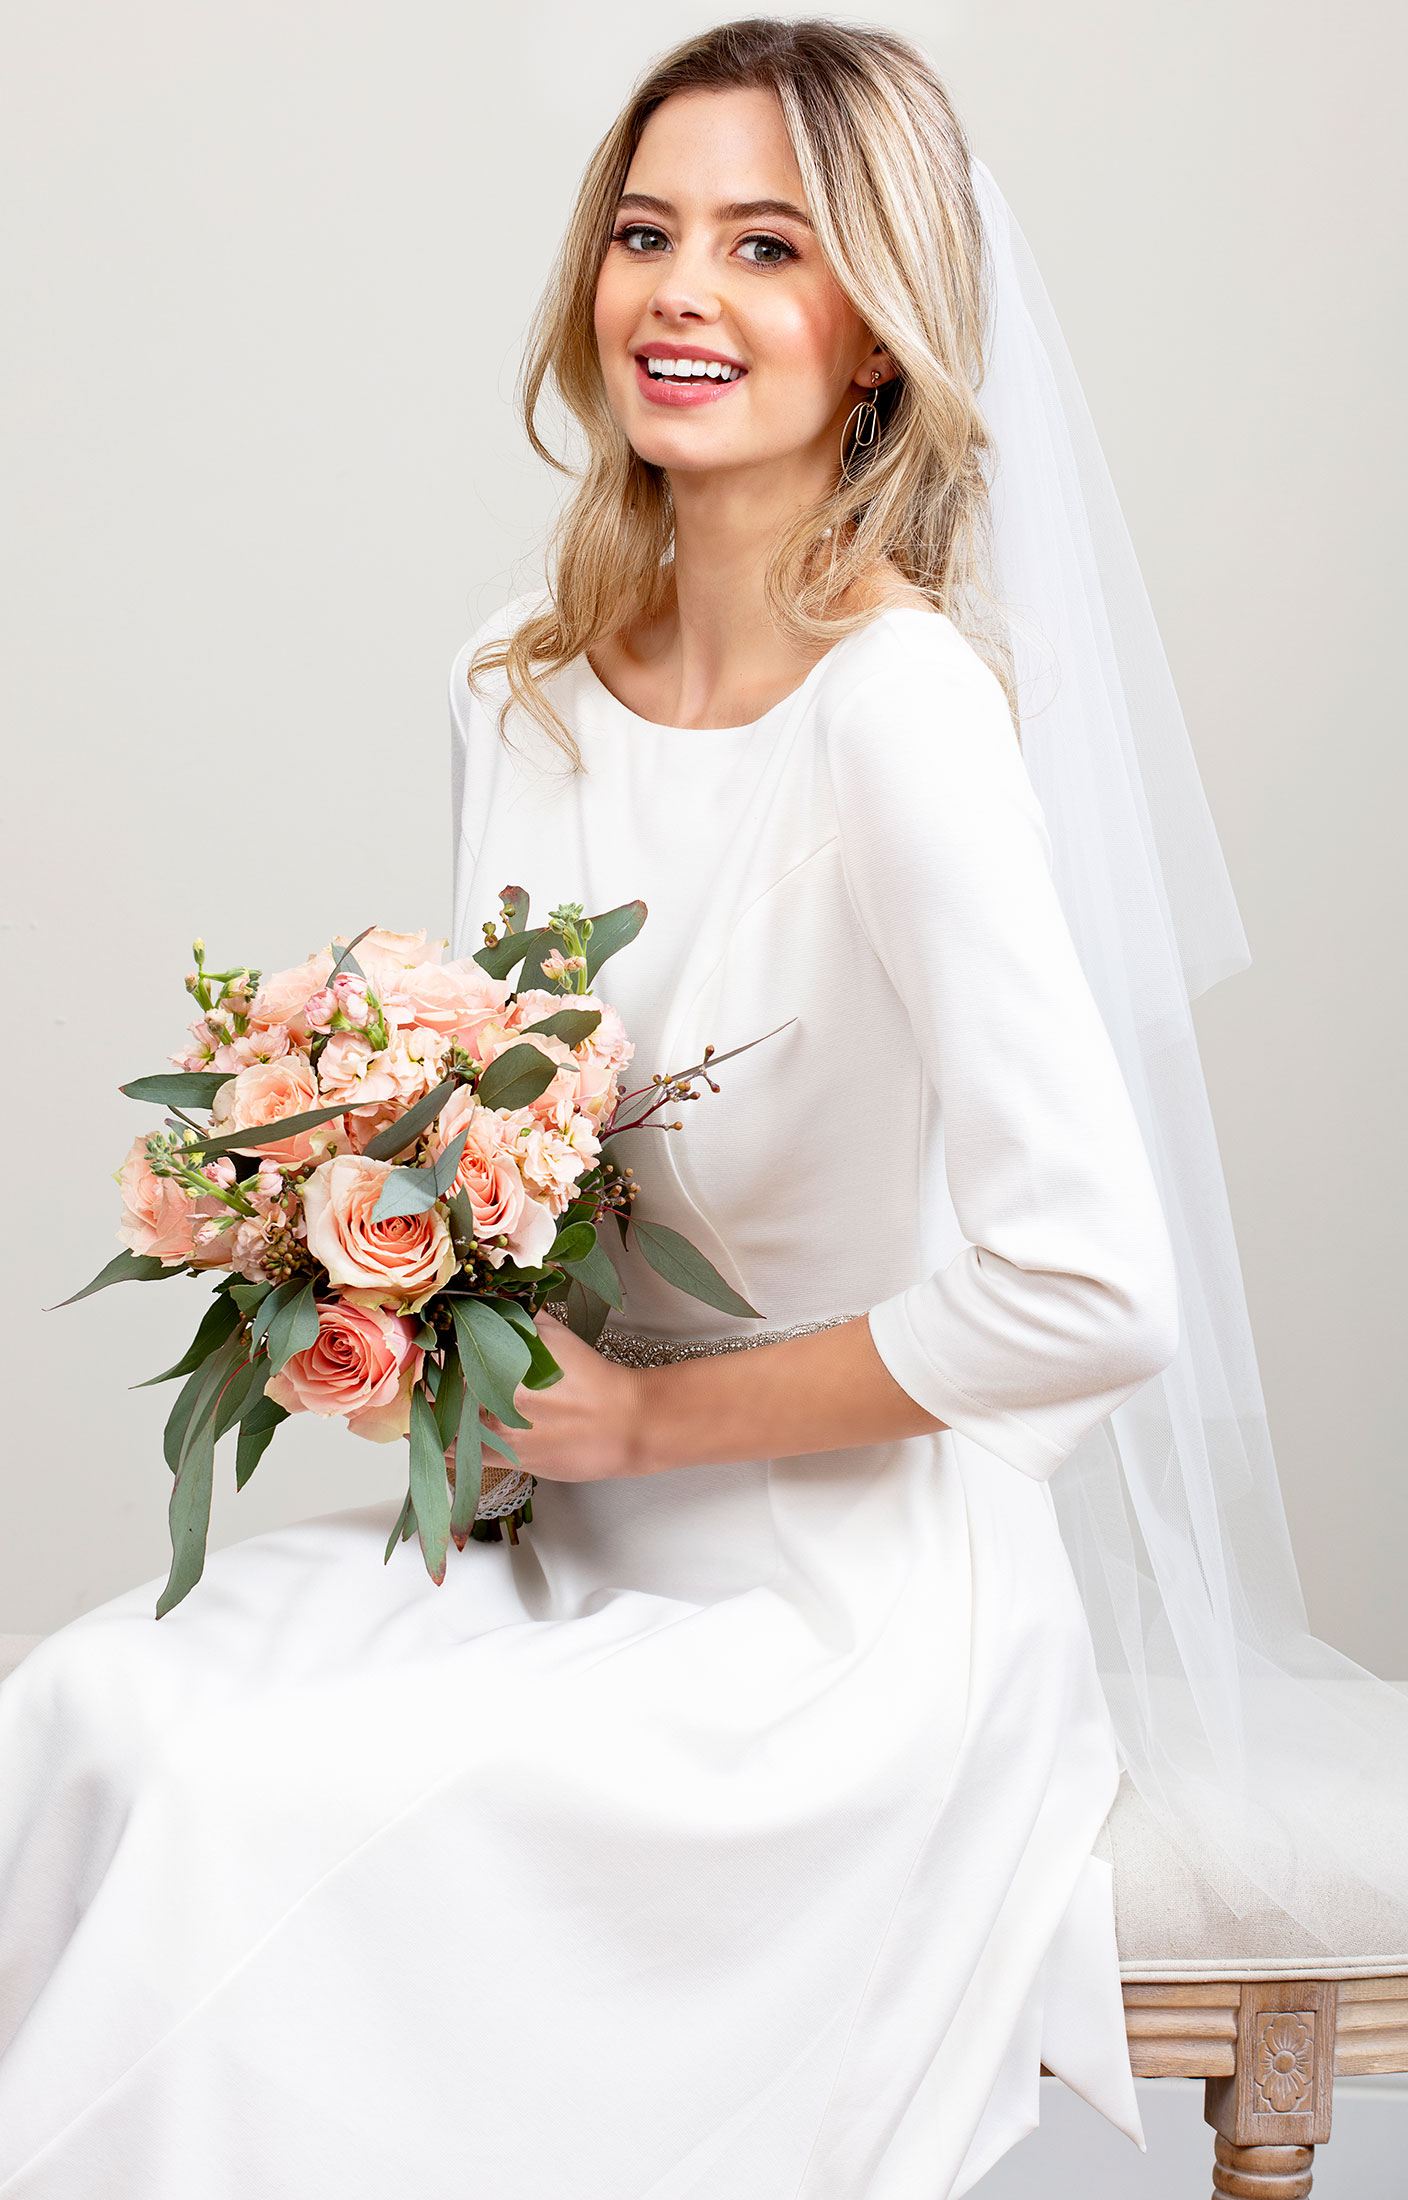 White veil with ivory dress?, Weddings, Wedding Attire